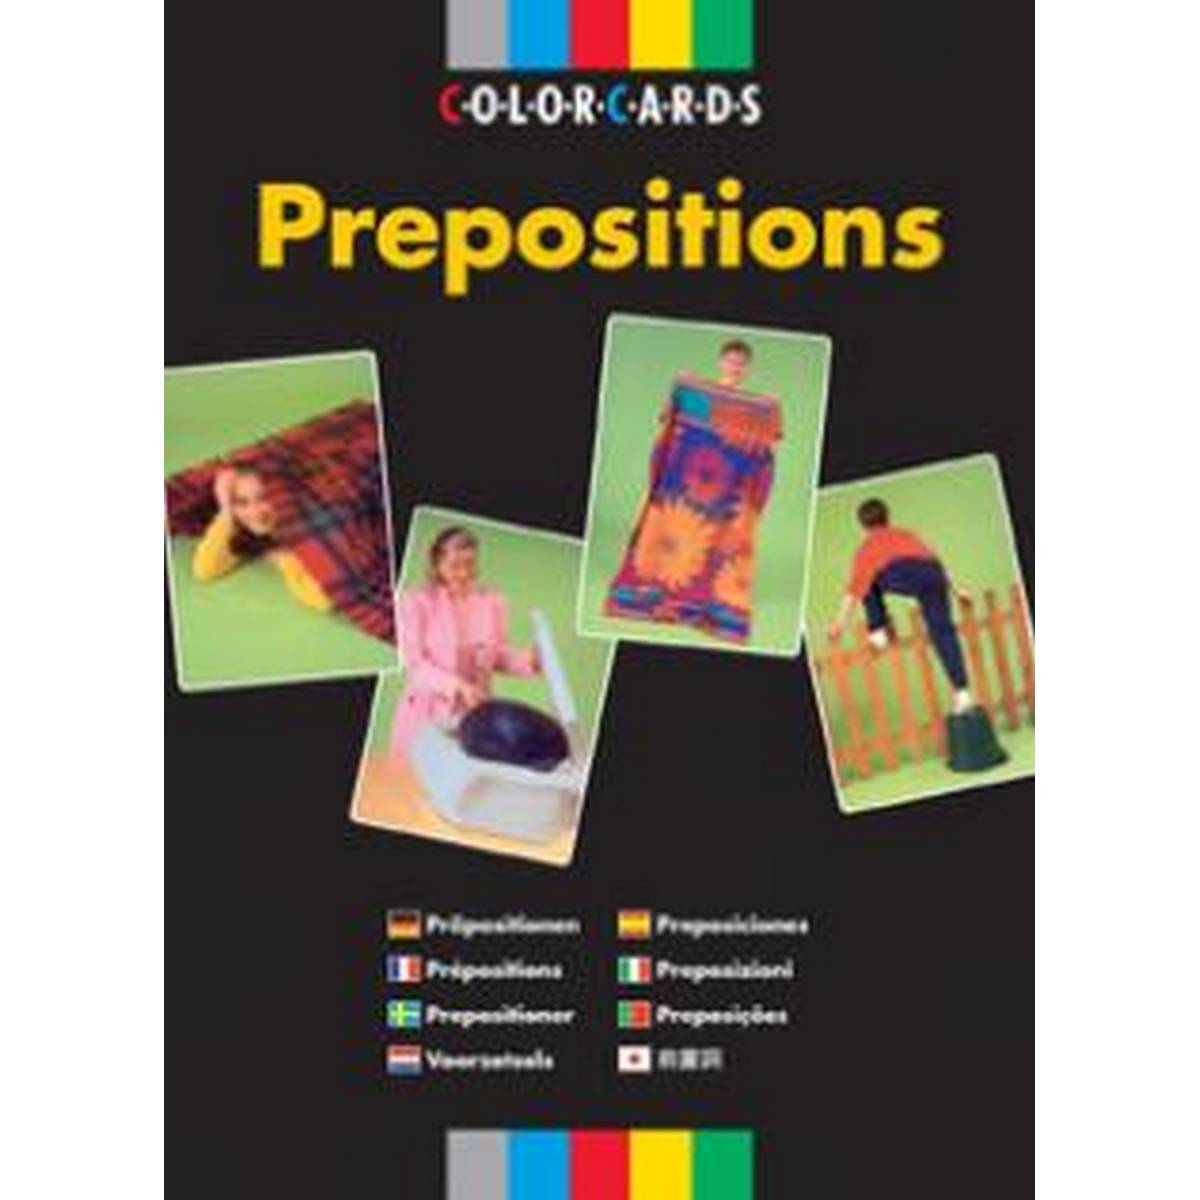 ColorCards: Prepositions